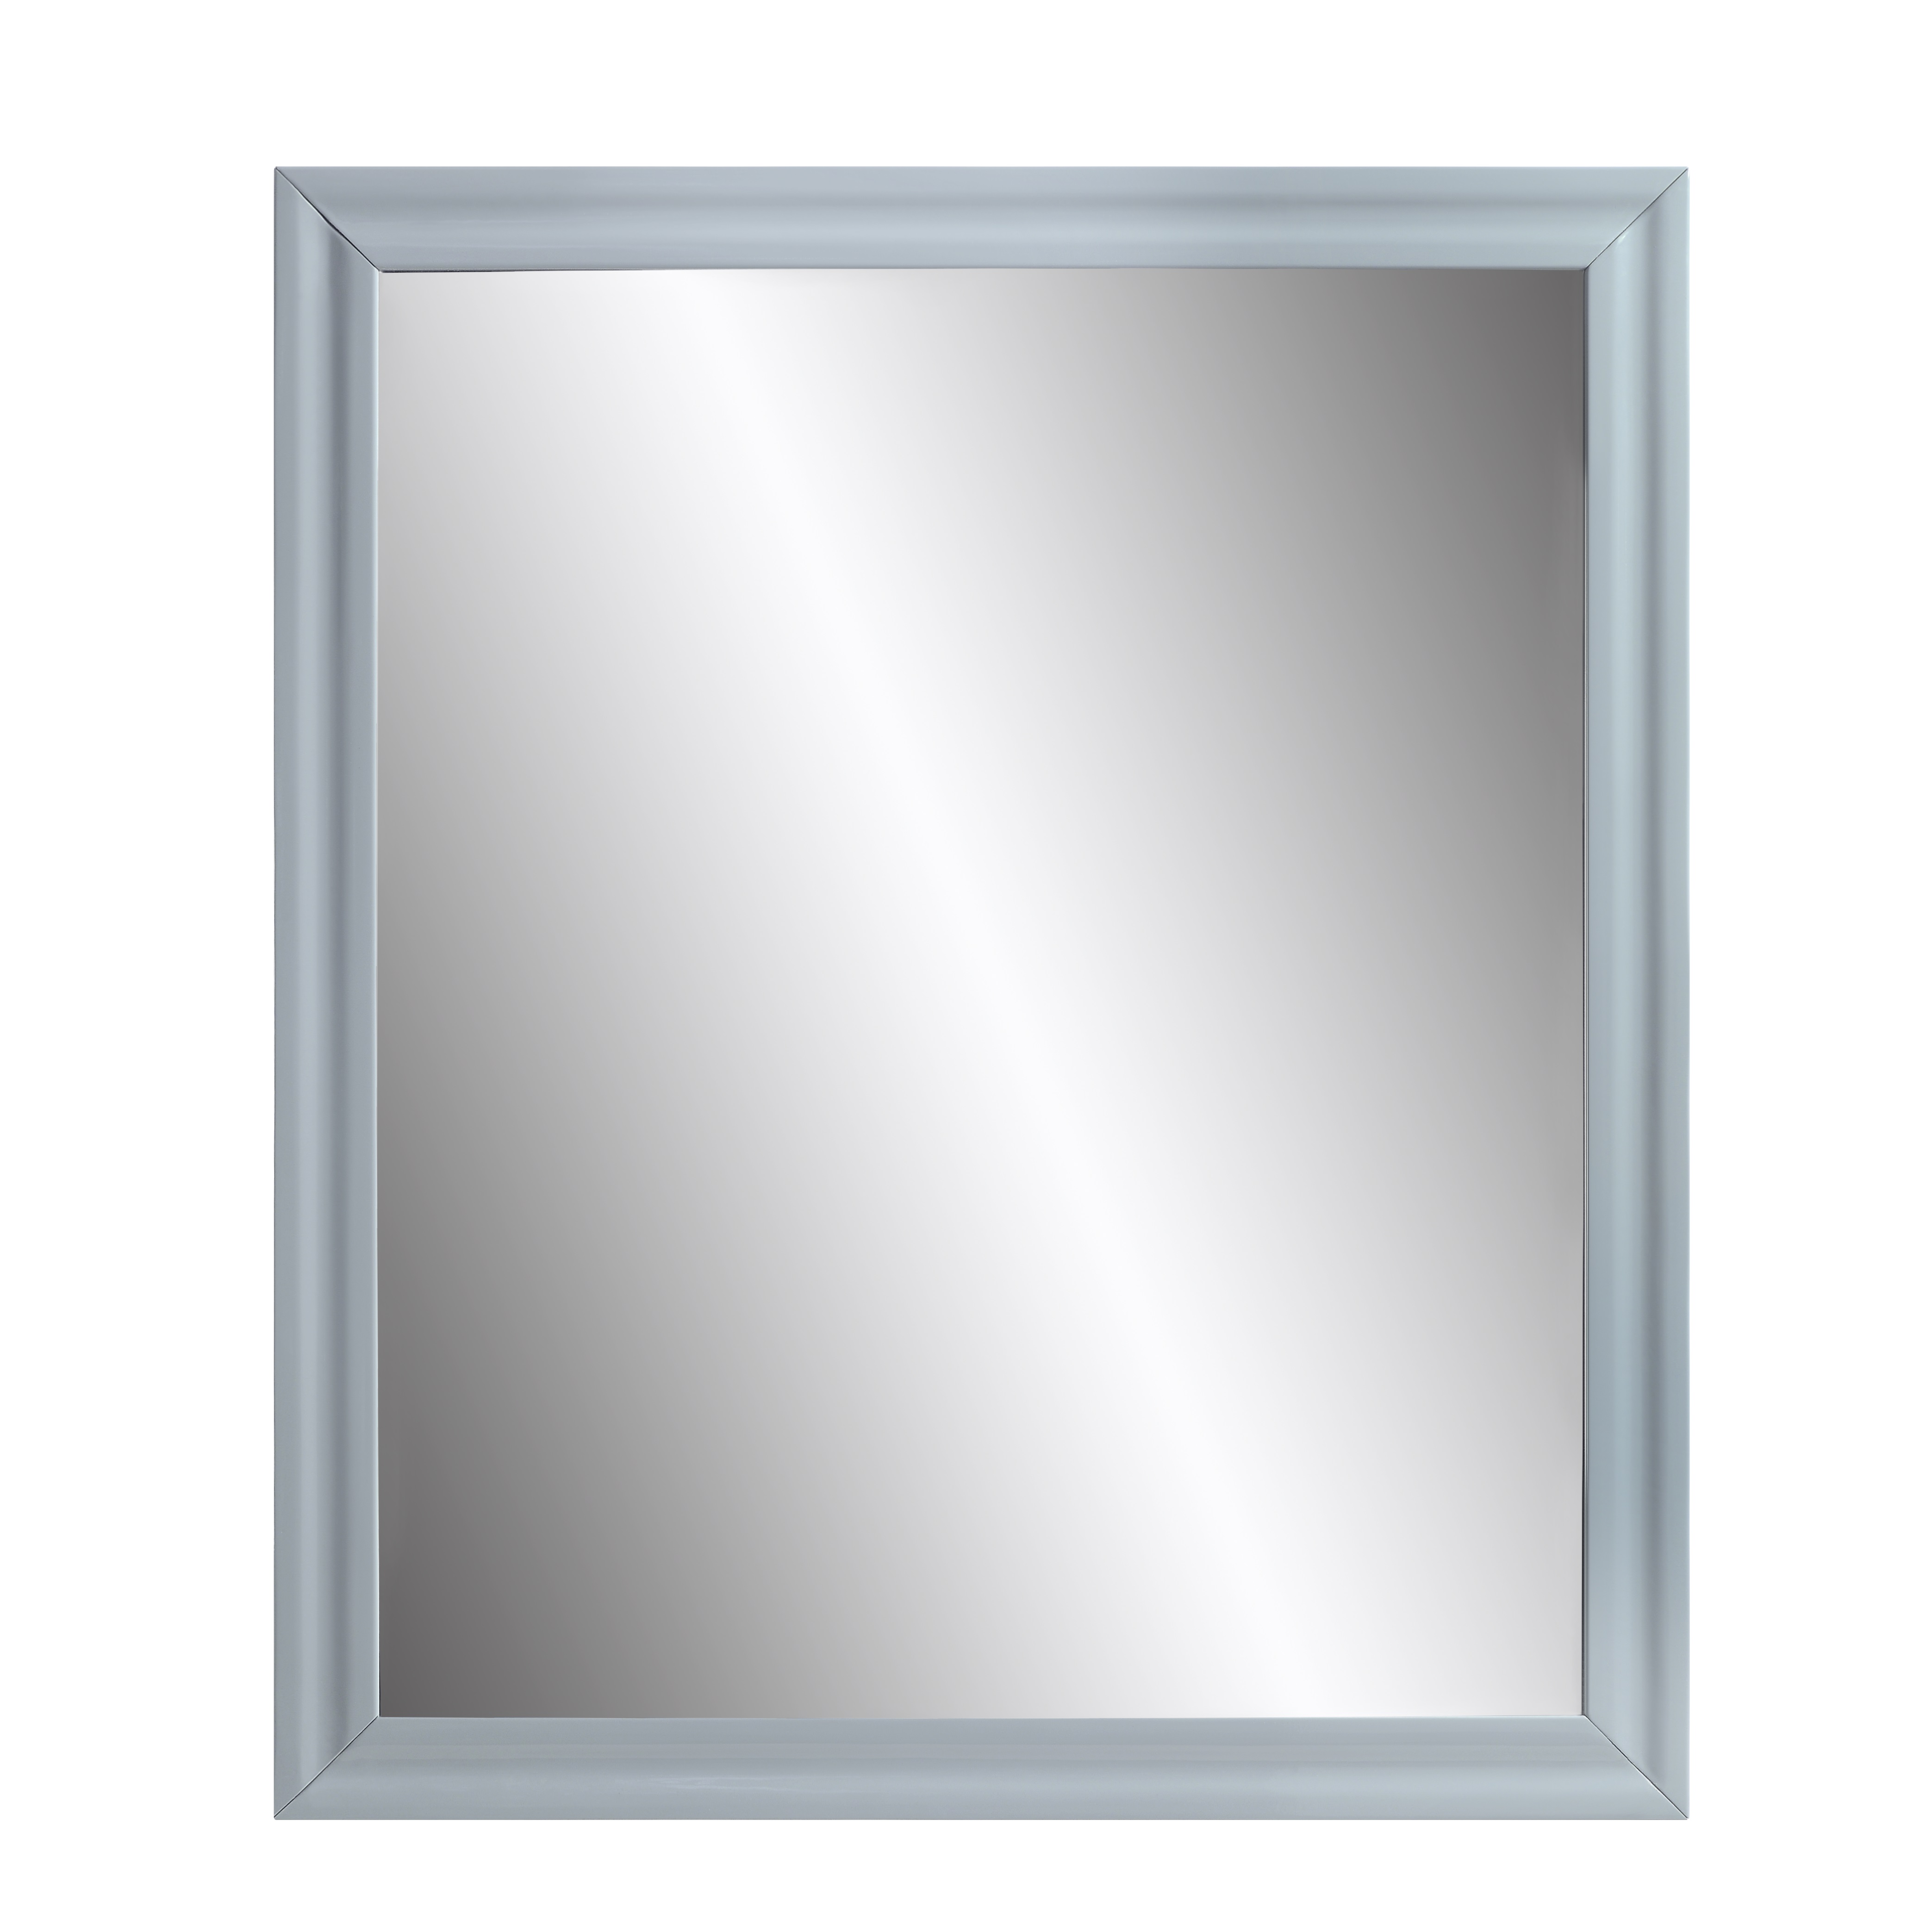 ACME Gaines Mirror, Gray High Gloss Finish